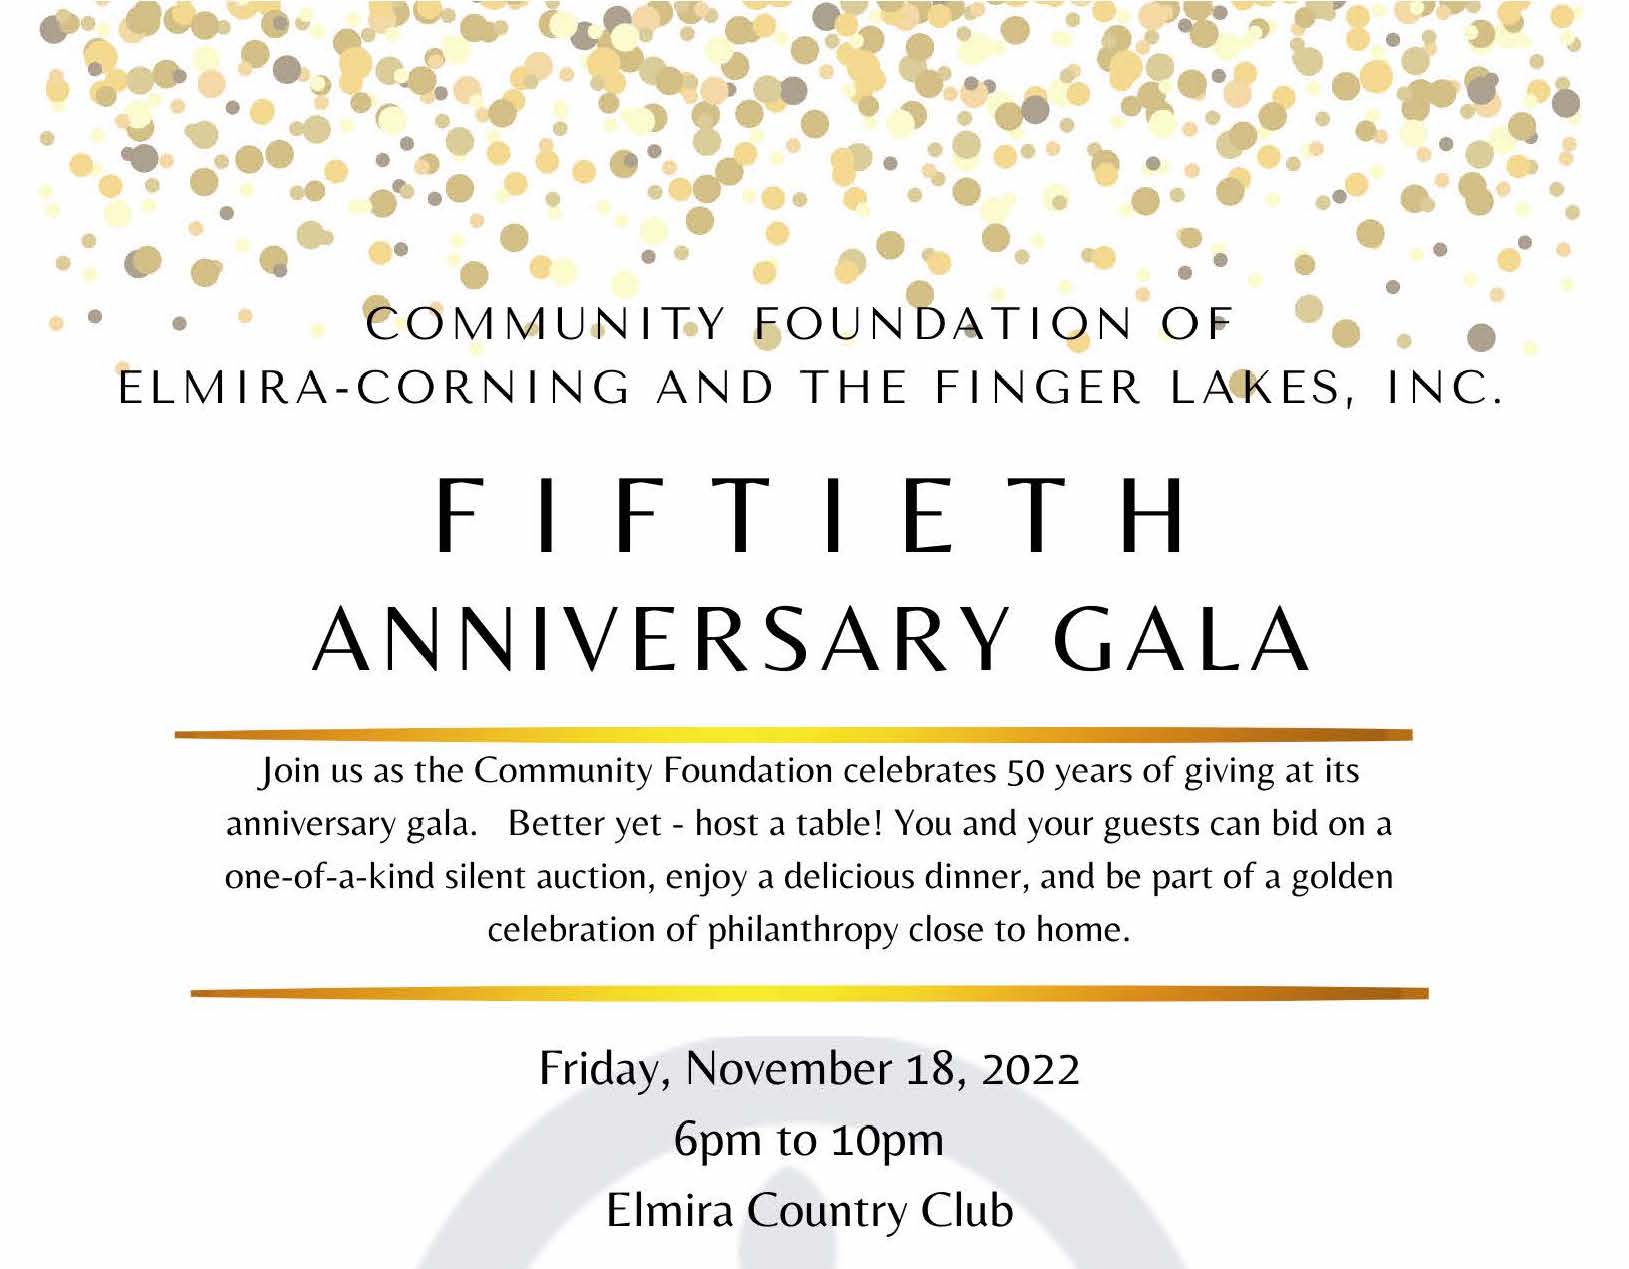 The Community Foundation Gala